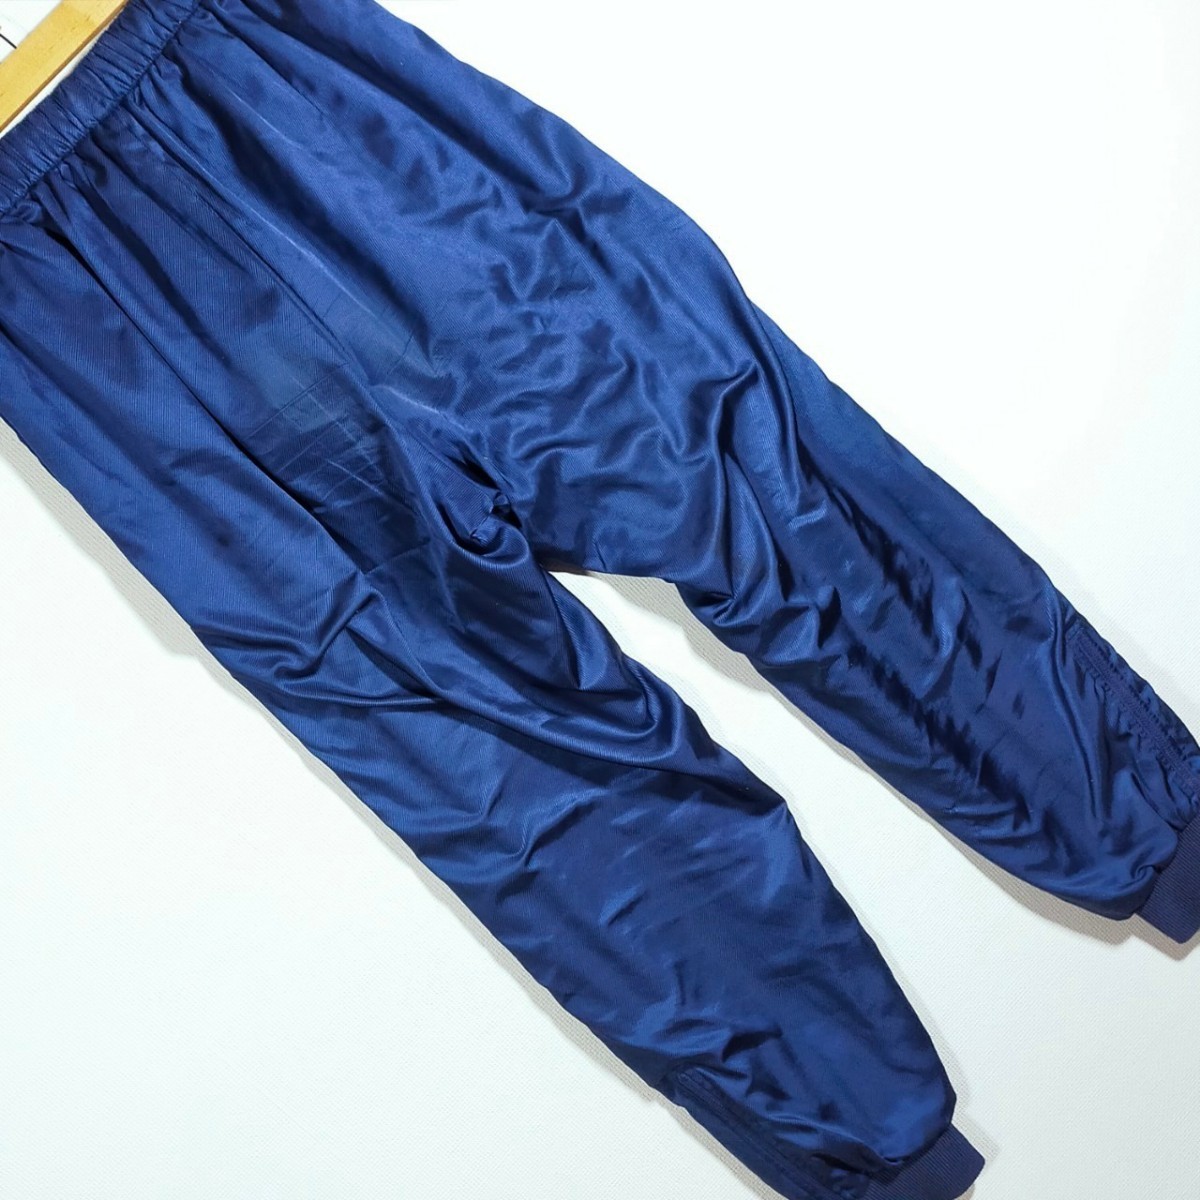 [SUPER STAR]s perth ta- protection against cold pants trousers training sport motion hem fastener MIZUNO Mizuno navy men's XO /Y1178GC